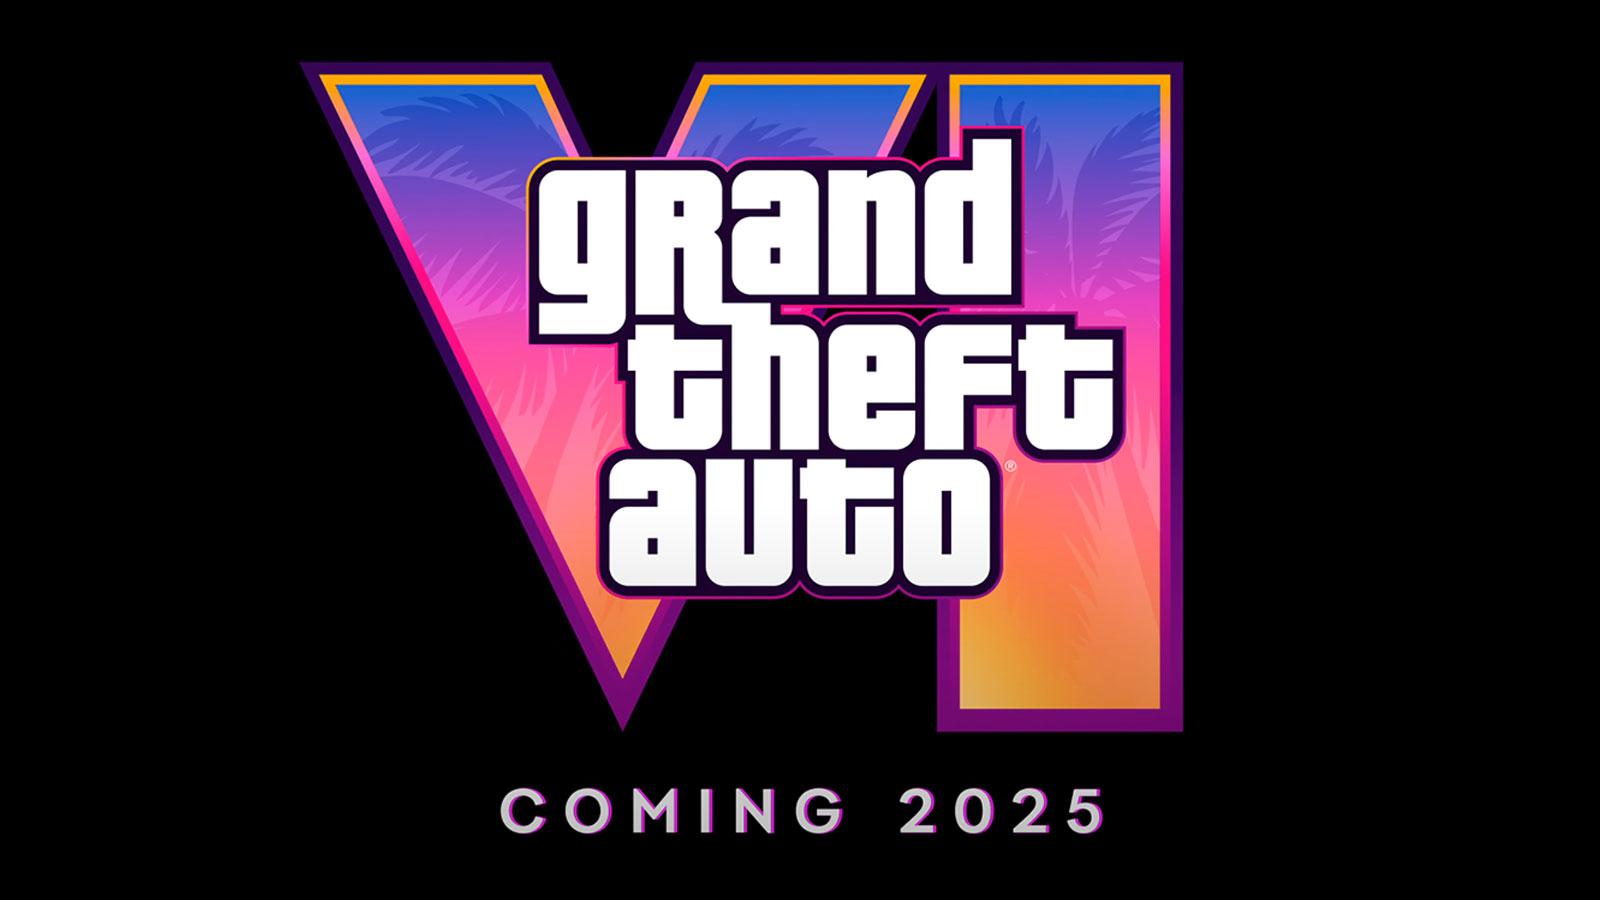 Le logo officiel de Grand Theft Auto VI